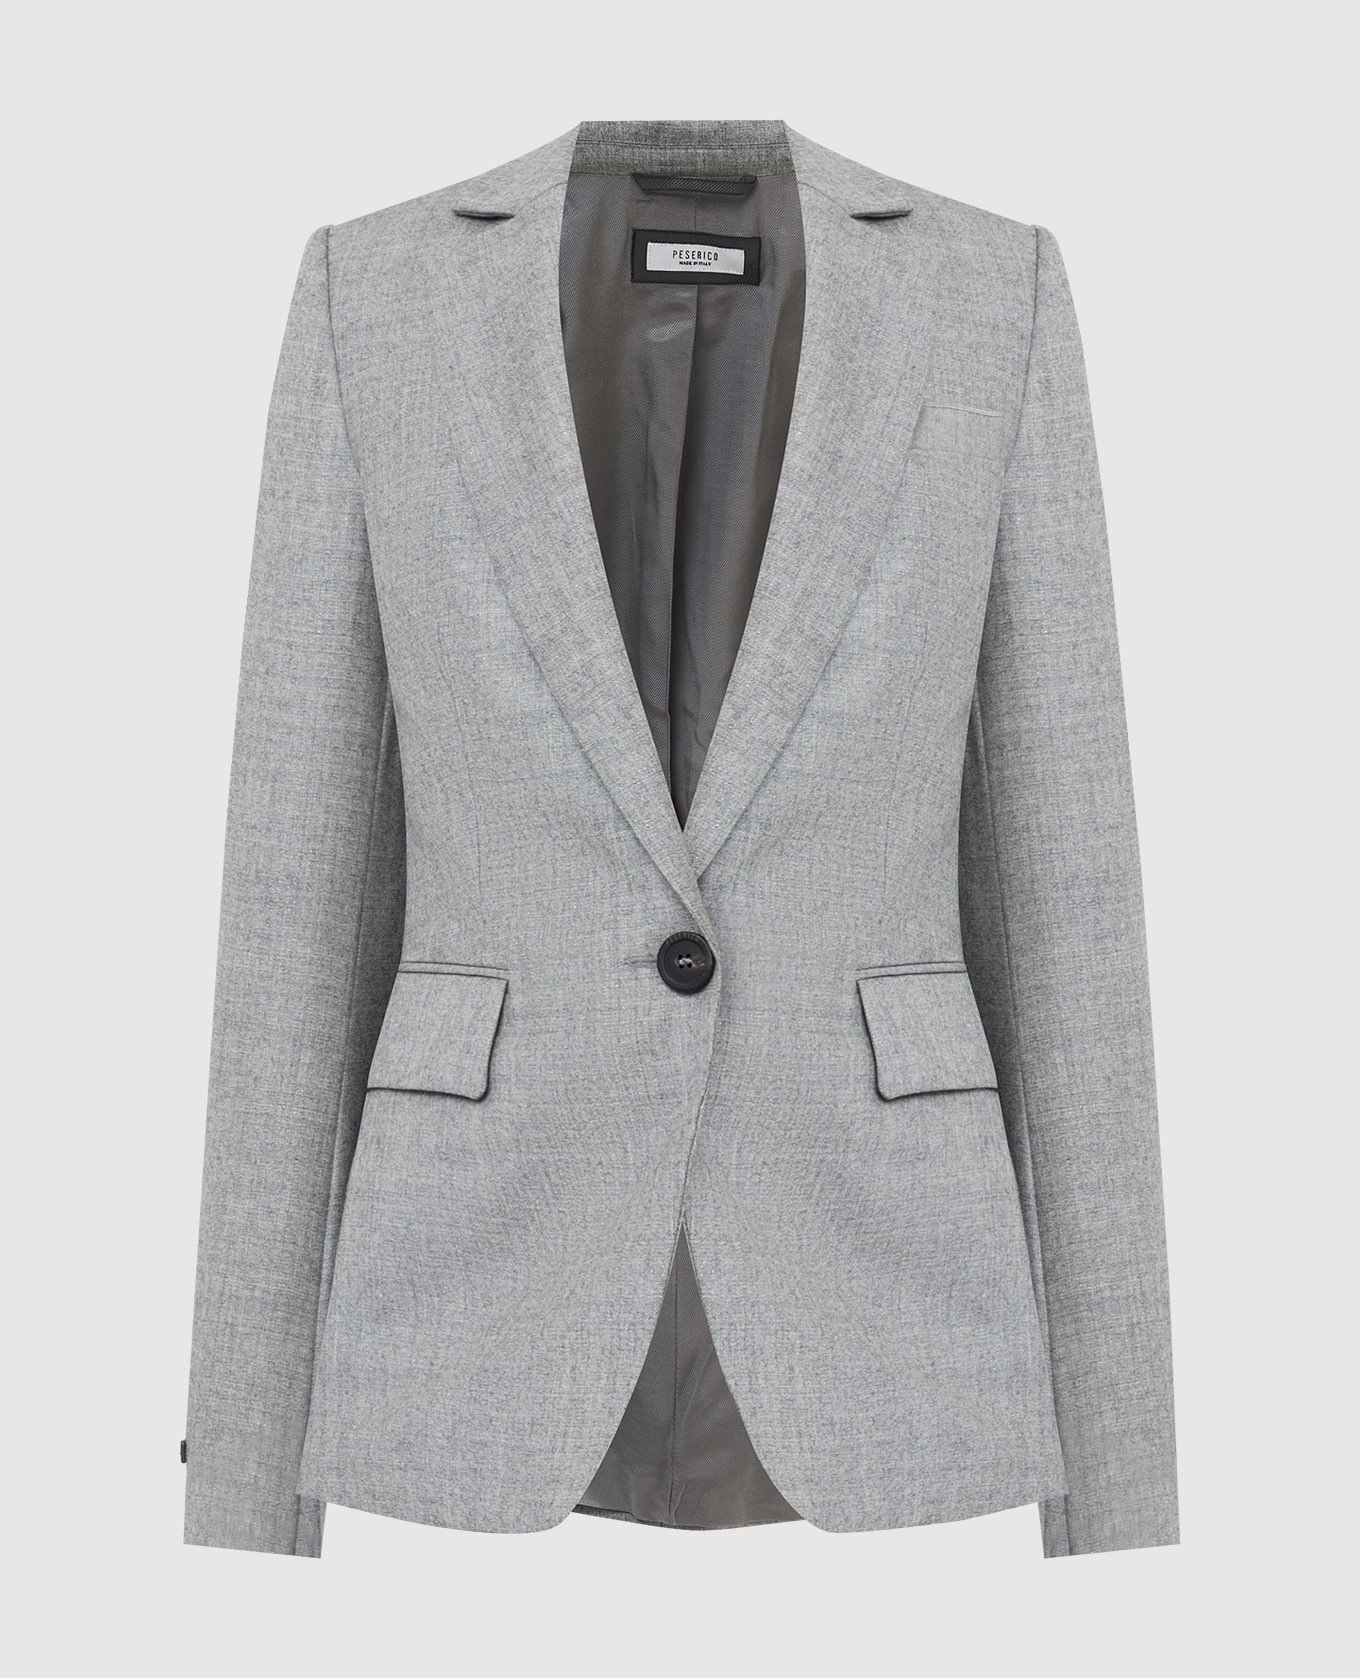 Light gray wool jacket with lurex